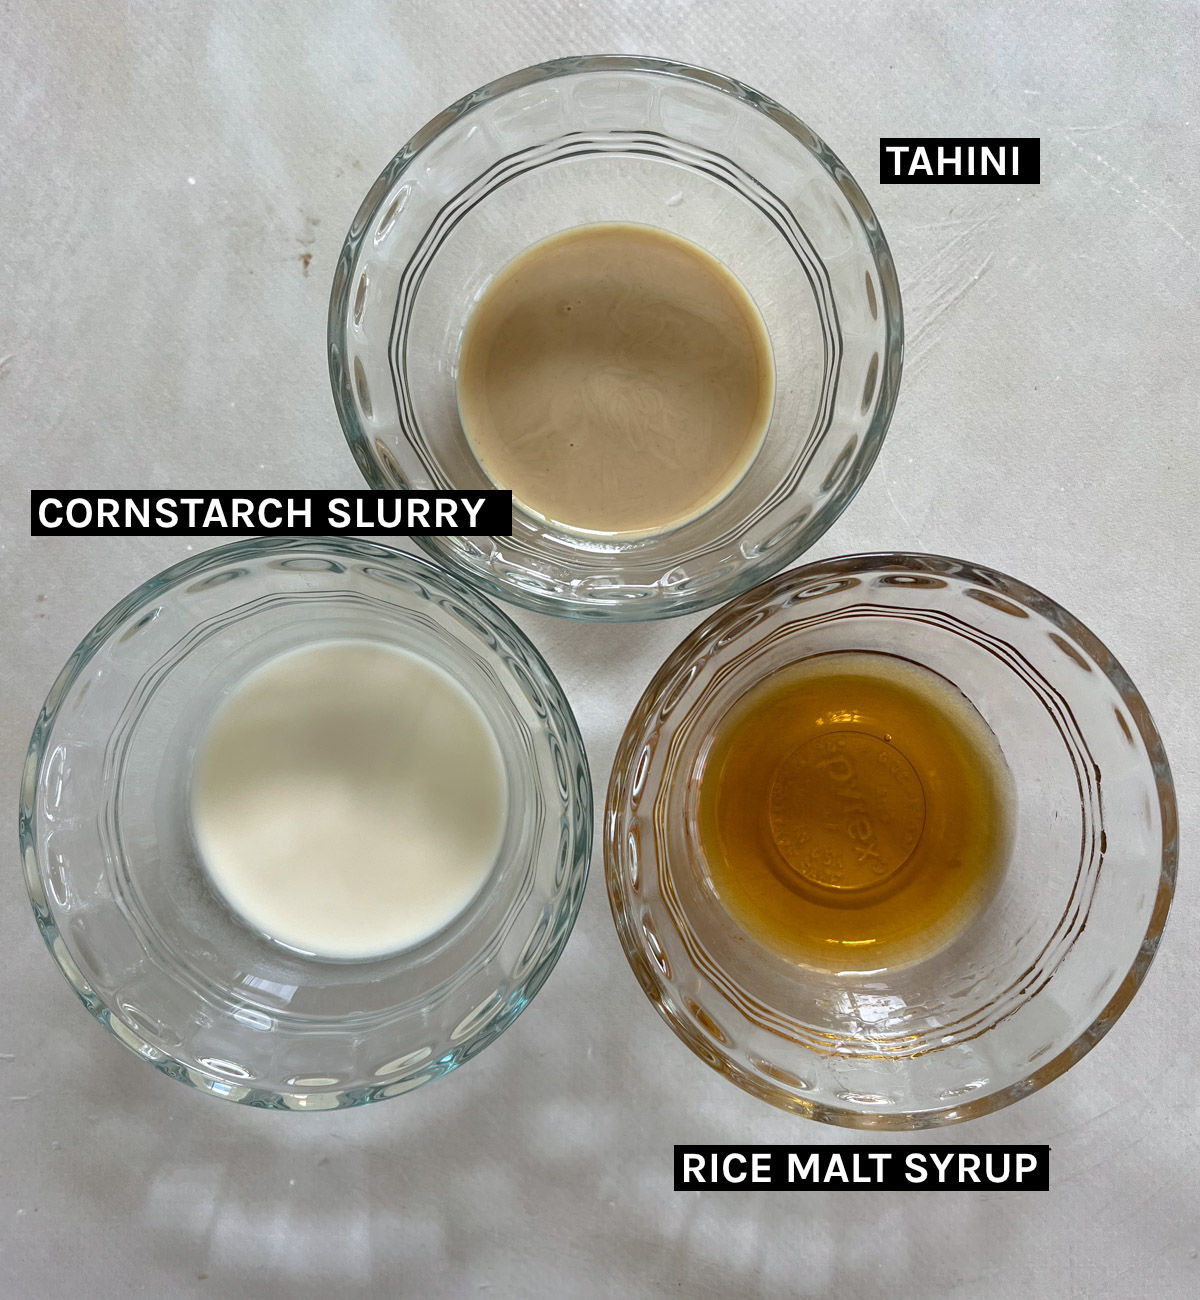 tahini, cornstarch slurry and rice malt in separate bowls